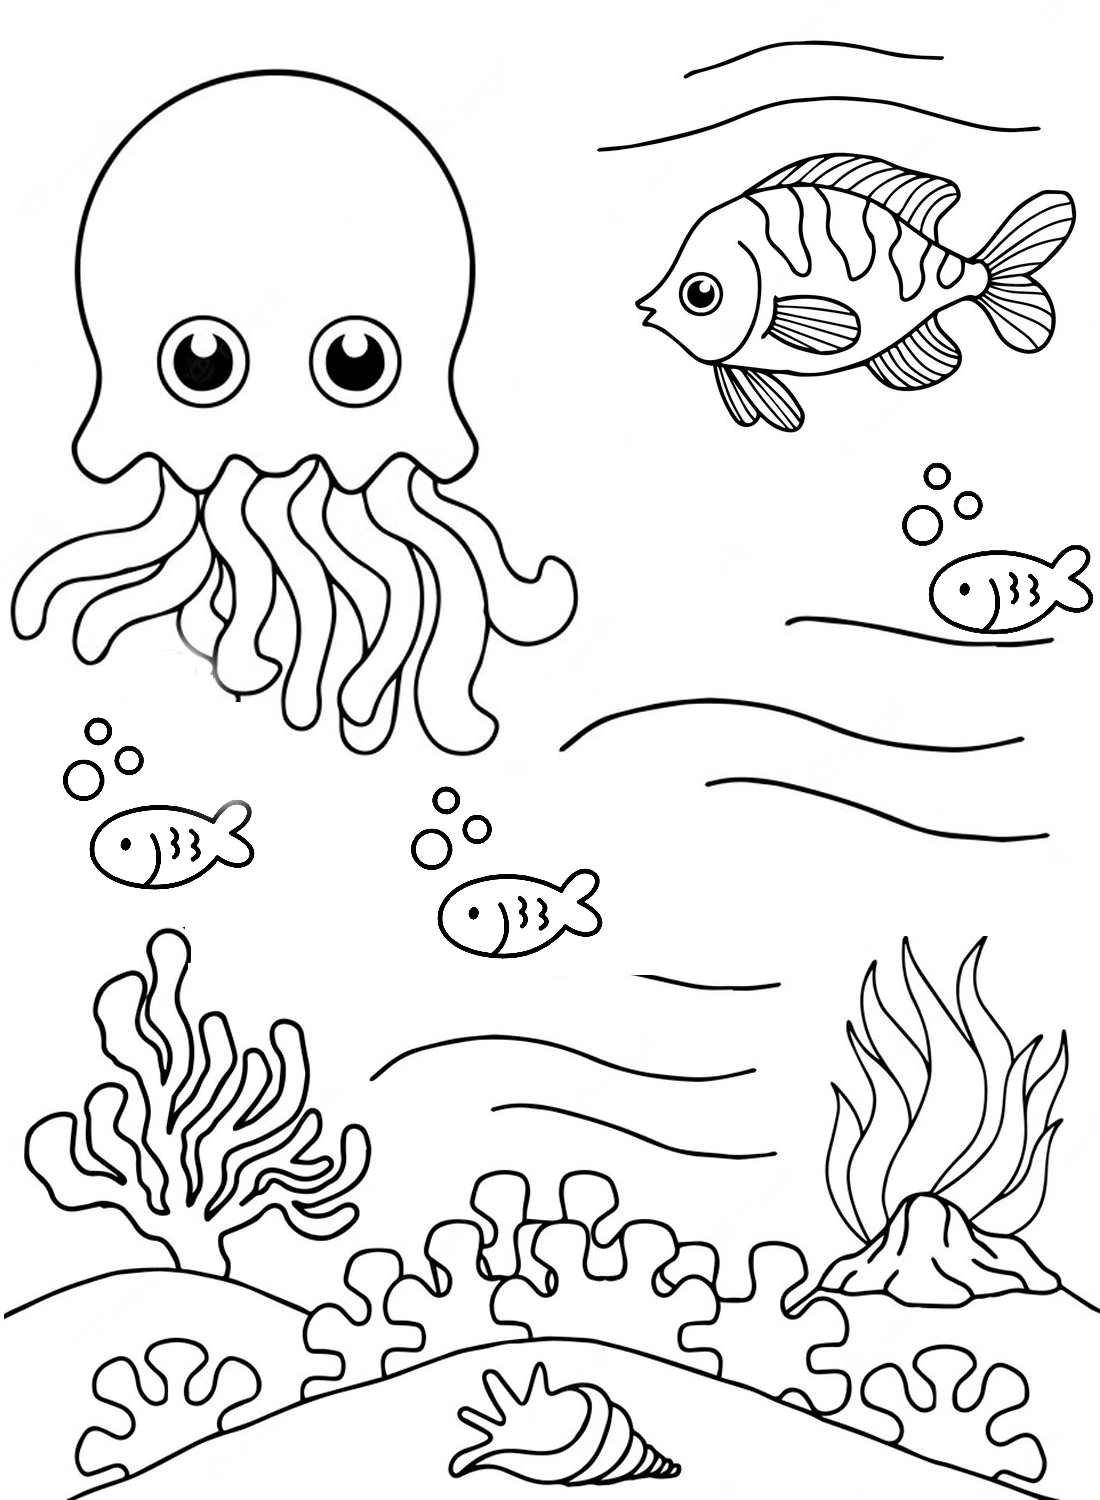 Página para colorir de medusas